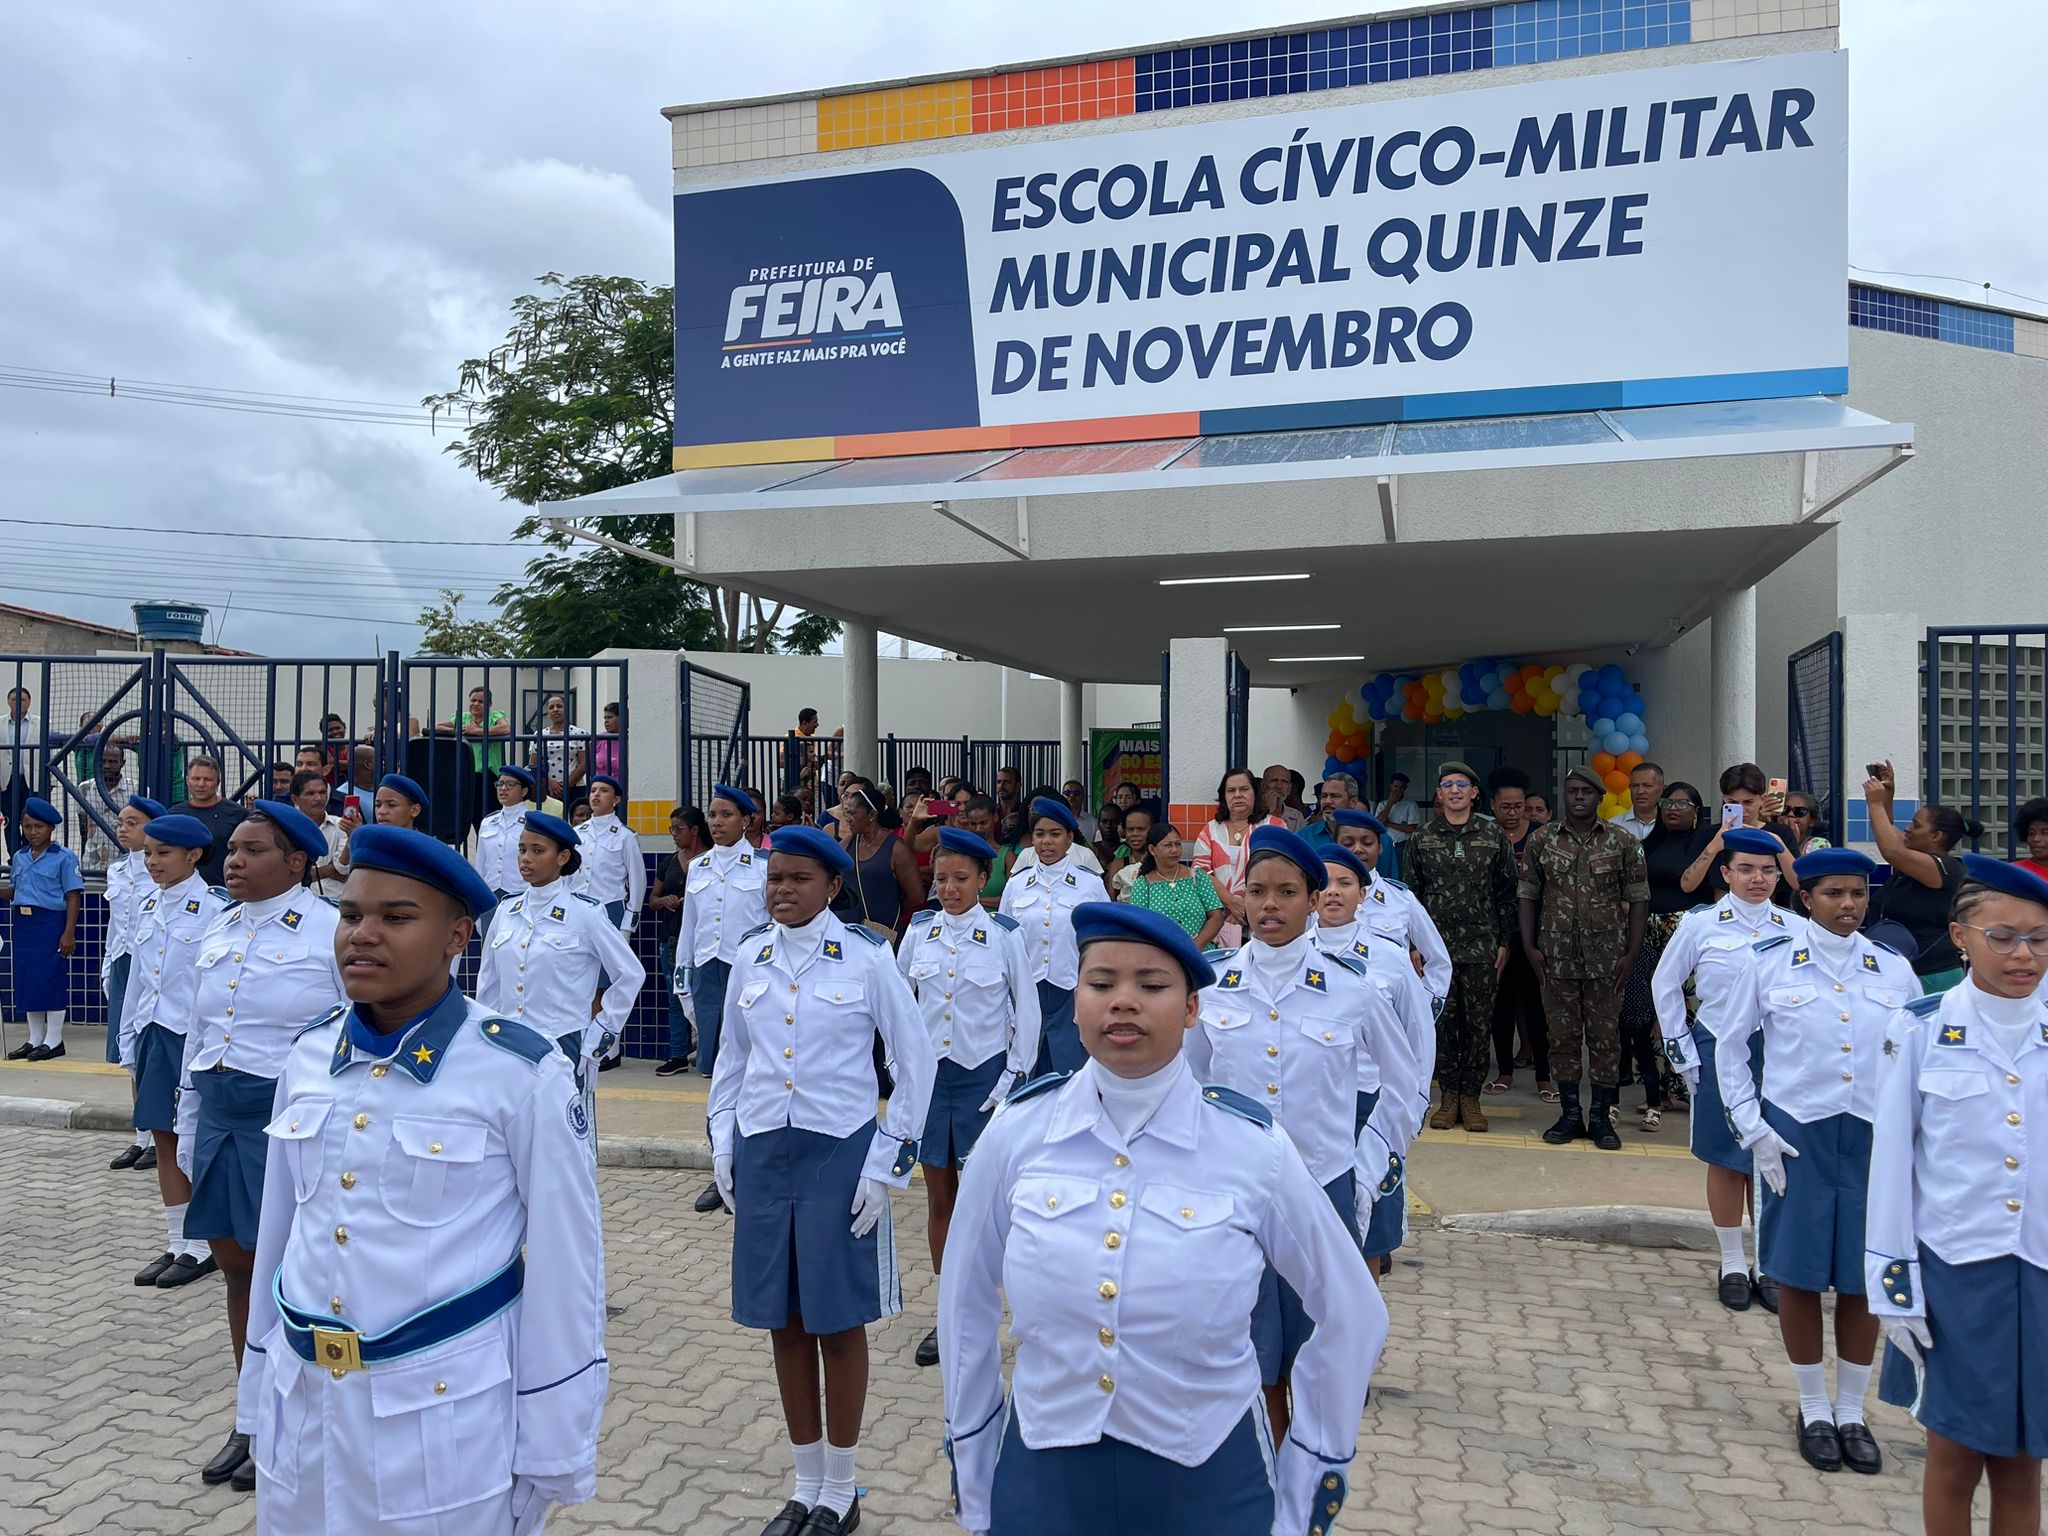 Distrito de Jaíba ganha nova escola Cívico-Militar